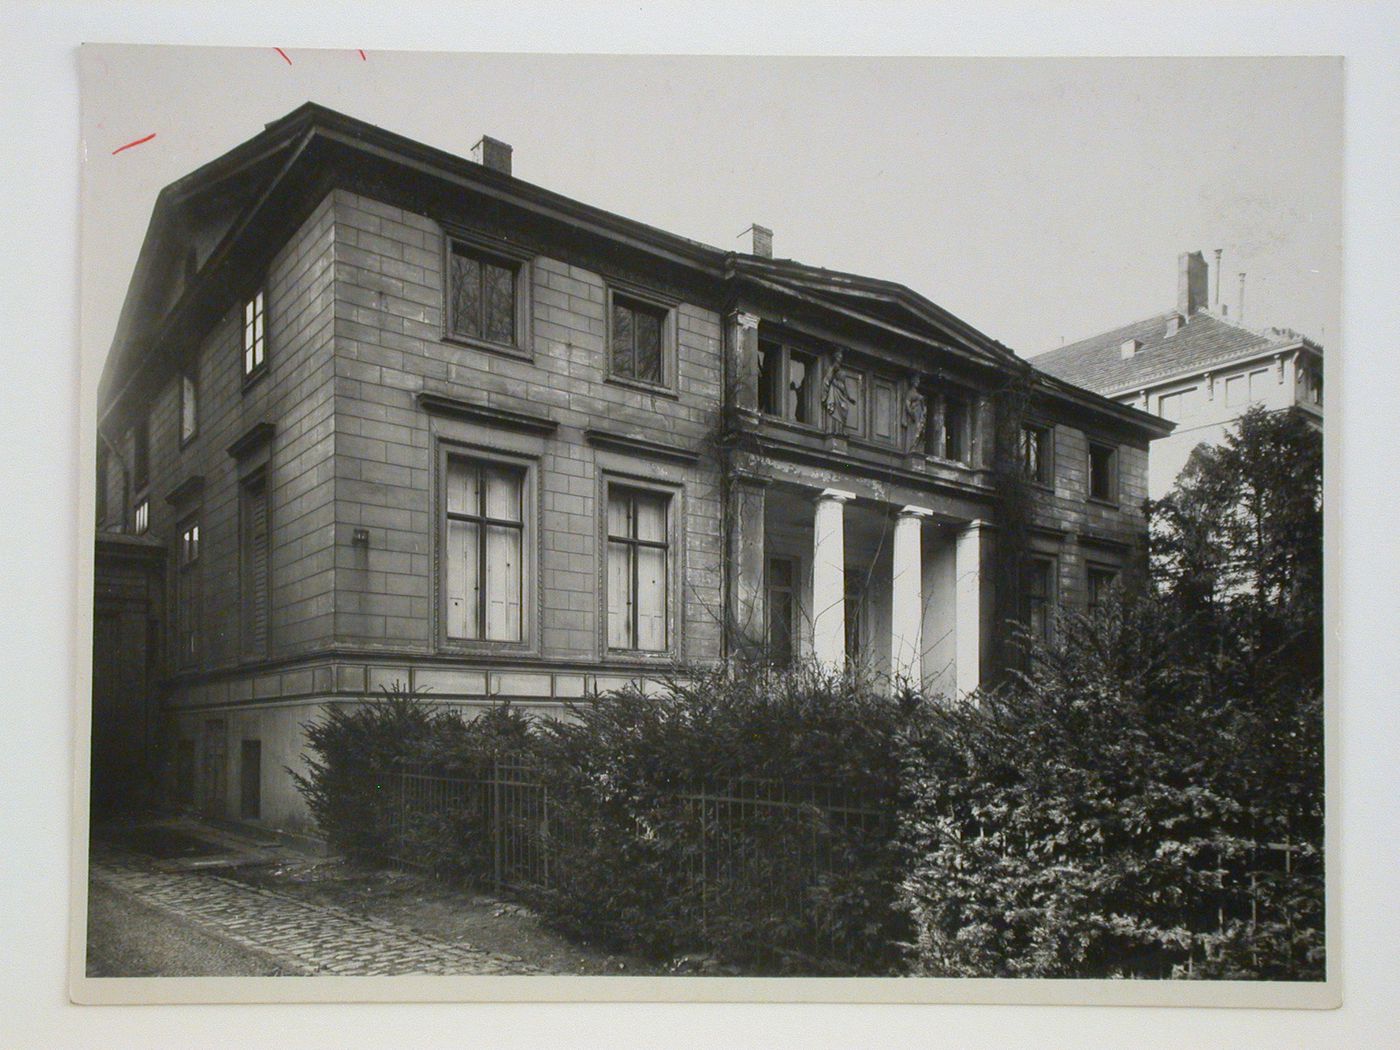 View of the Villa Nitsche (now demolished), 17 Bellevuestraße, Berlin, Germany